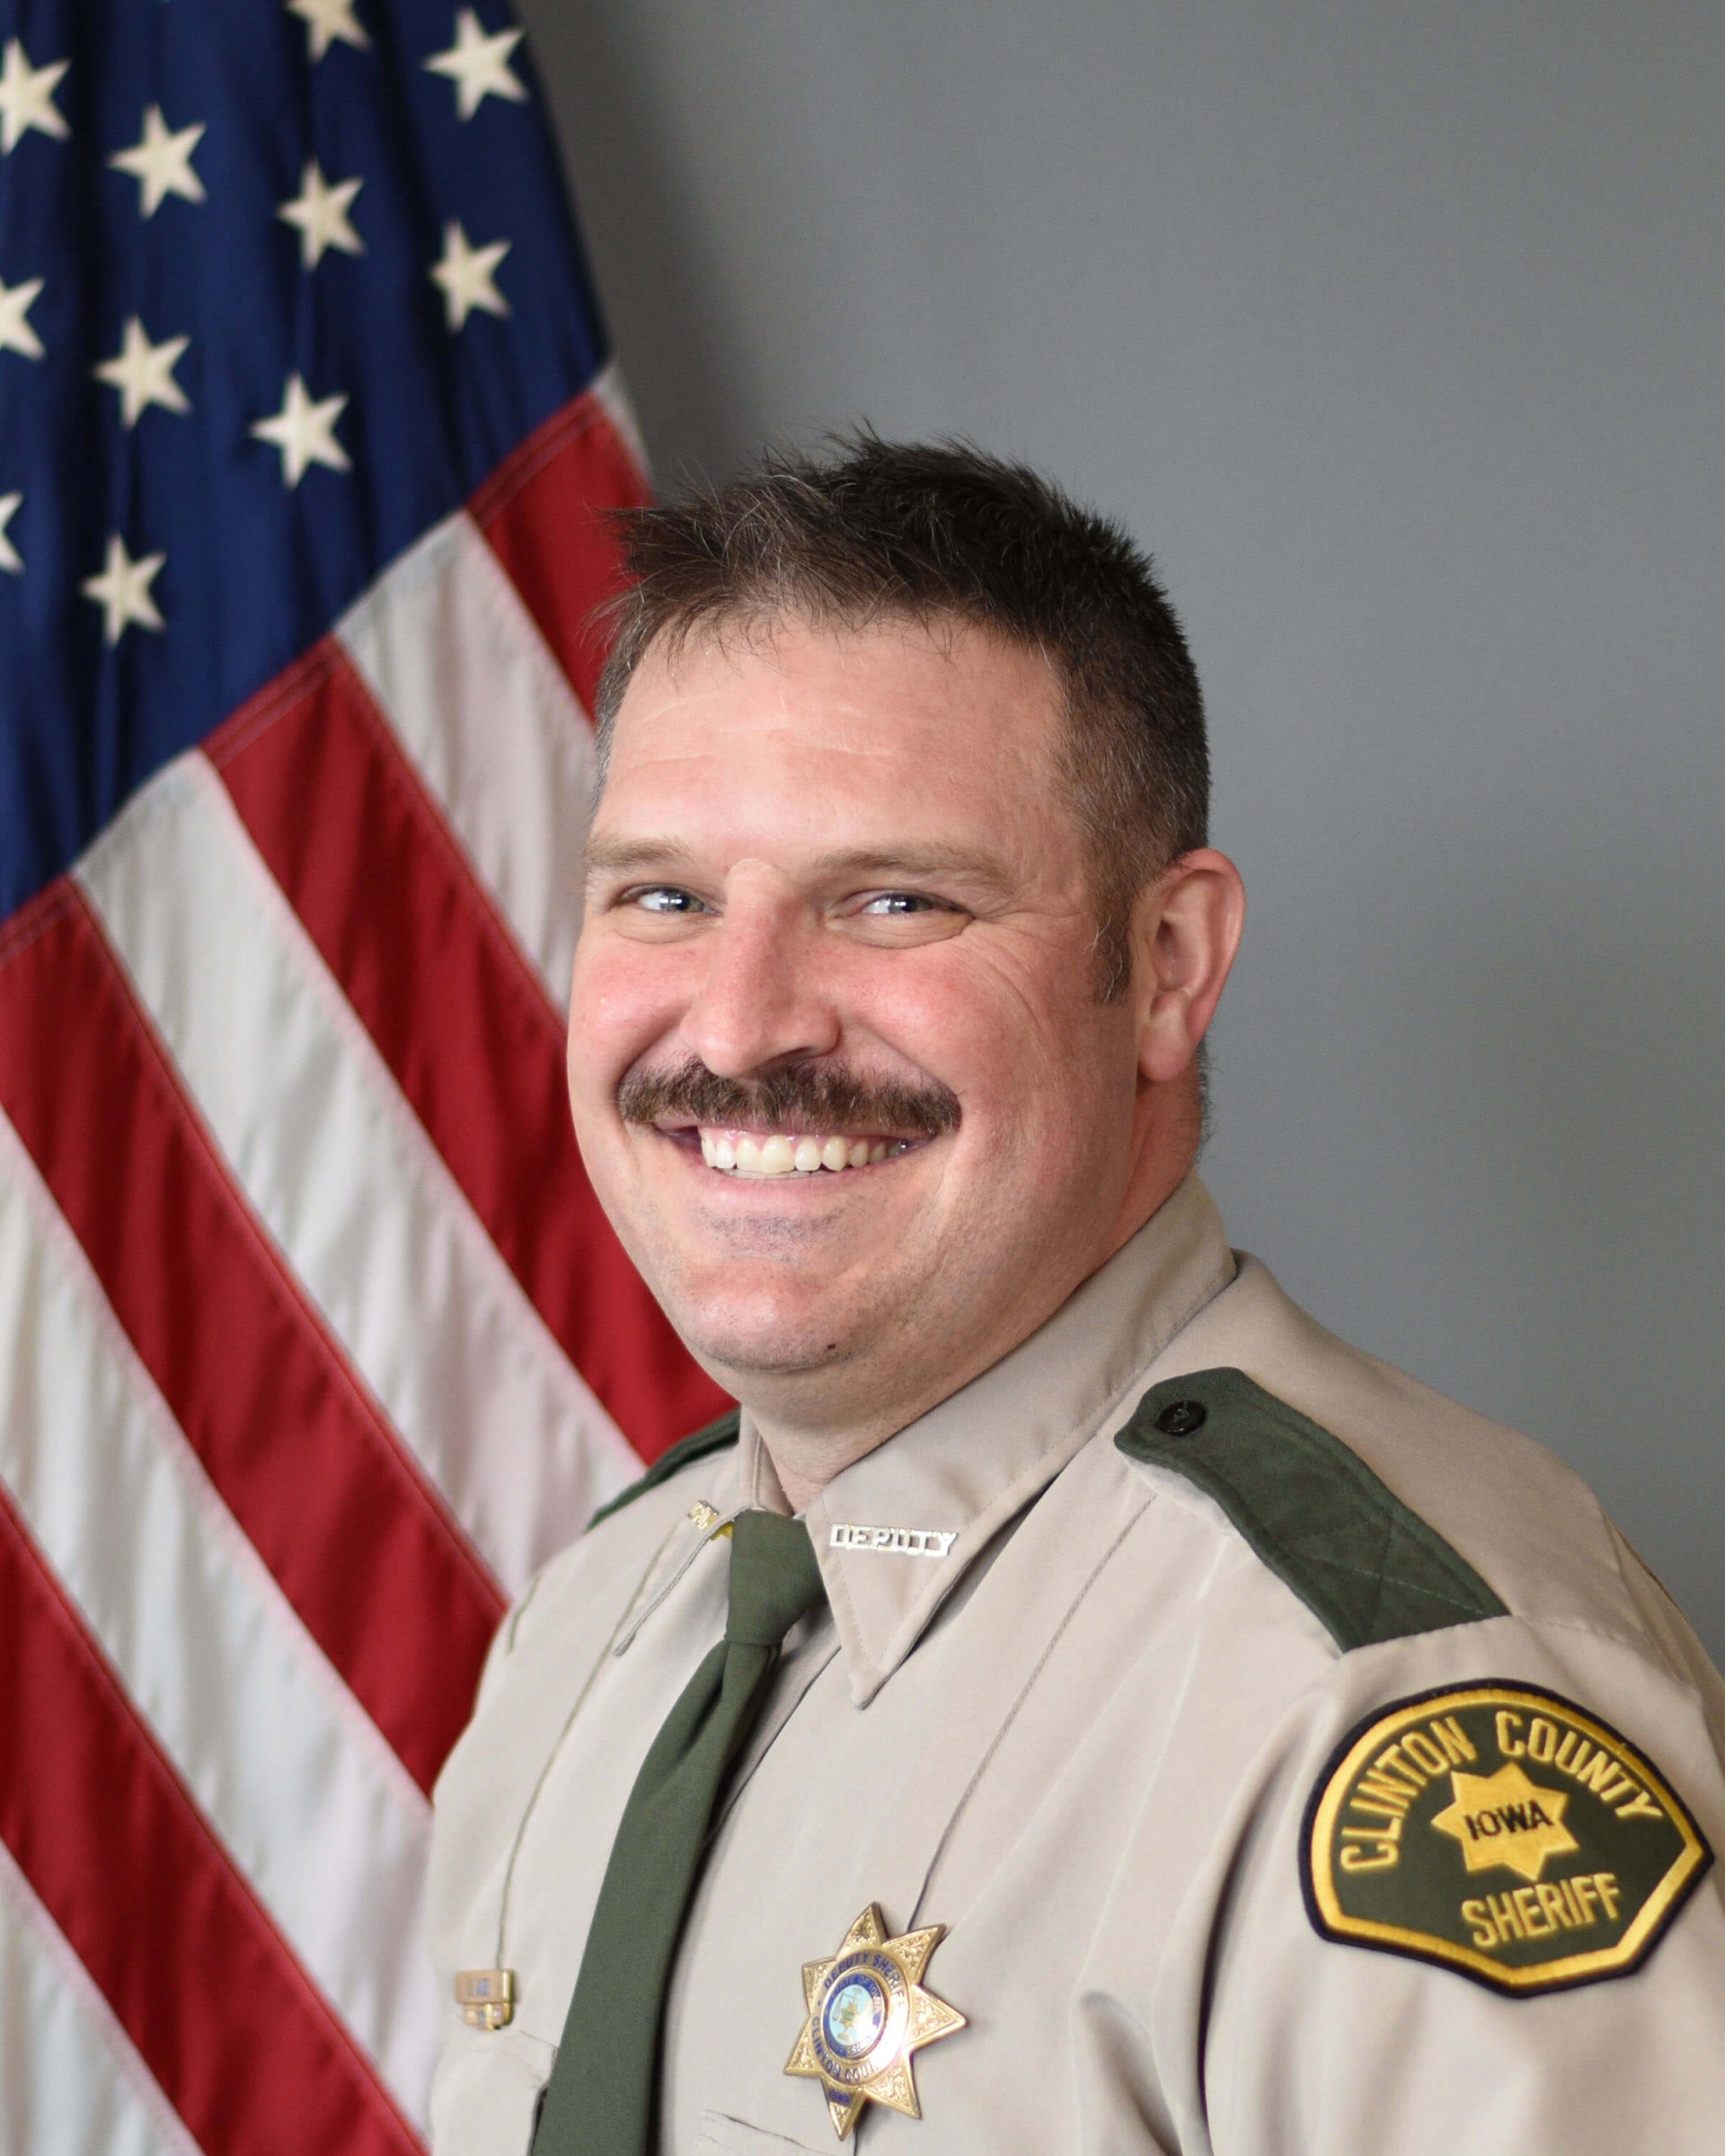 Clinton County Sheriff's Office D.A.R.E. Officer Zach Lange